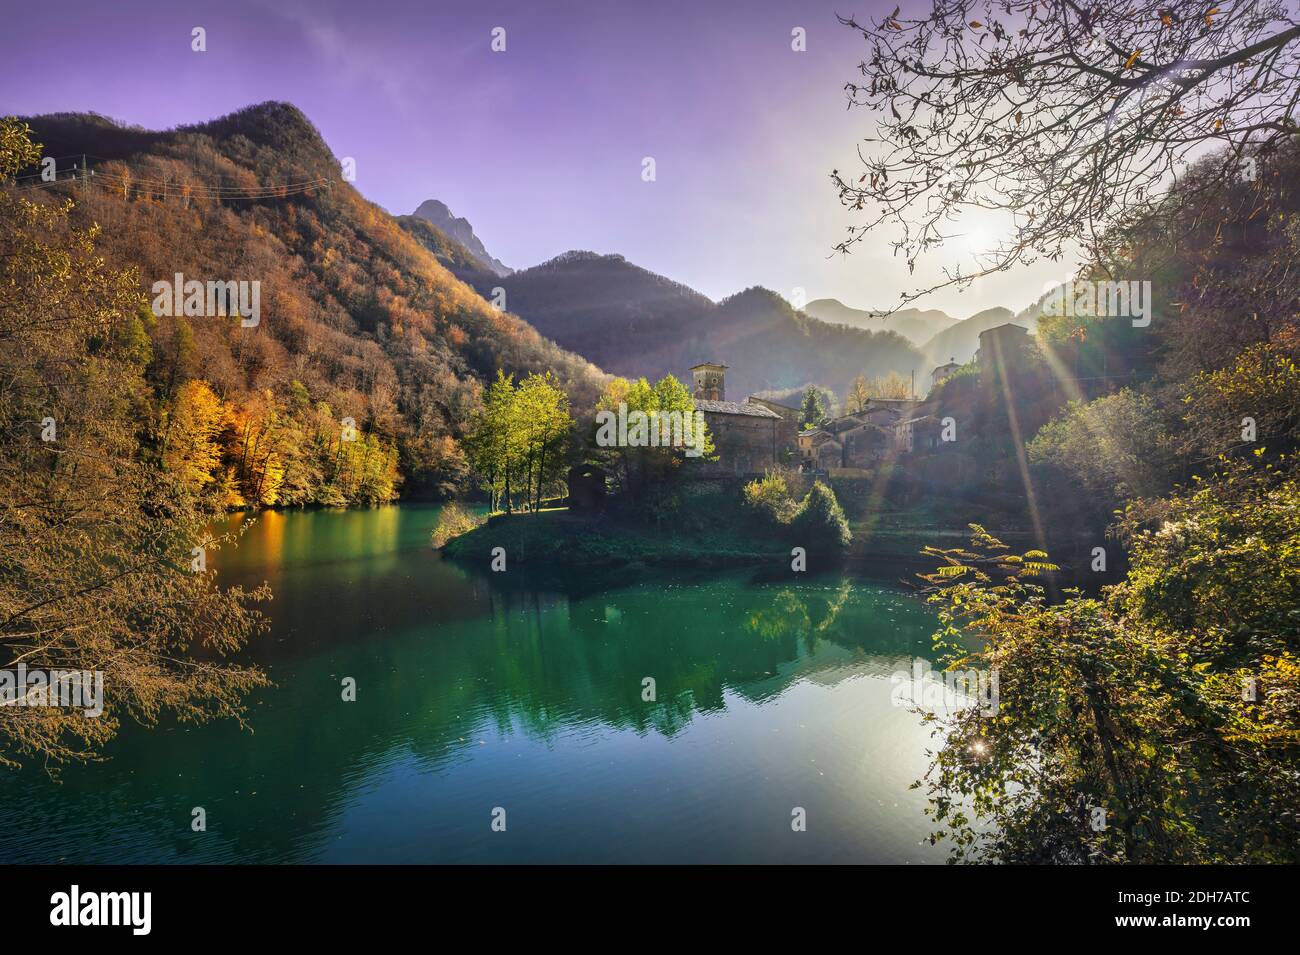 Isola Santa medieval village, lake and Alpi Apuane mountains in autumn foliage. Garfagnana, Tuscany, Italy Europe. Stock Photo